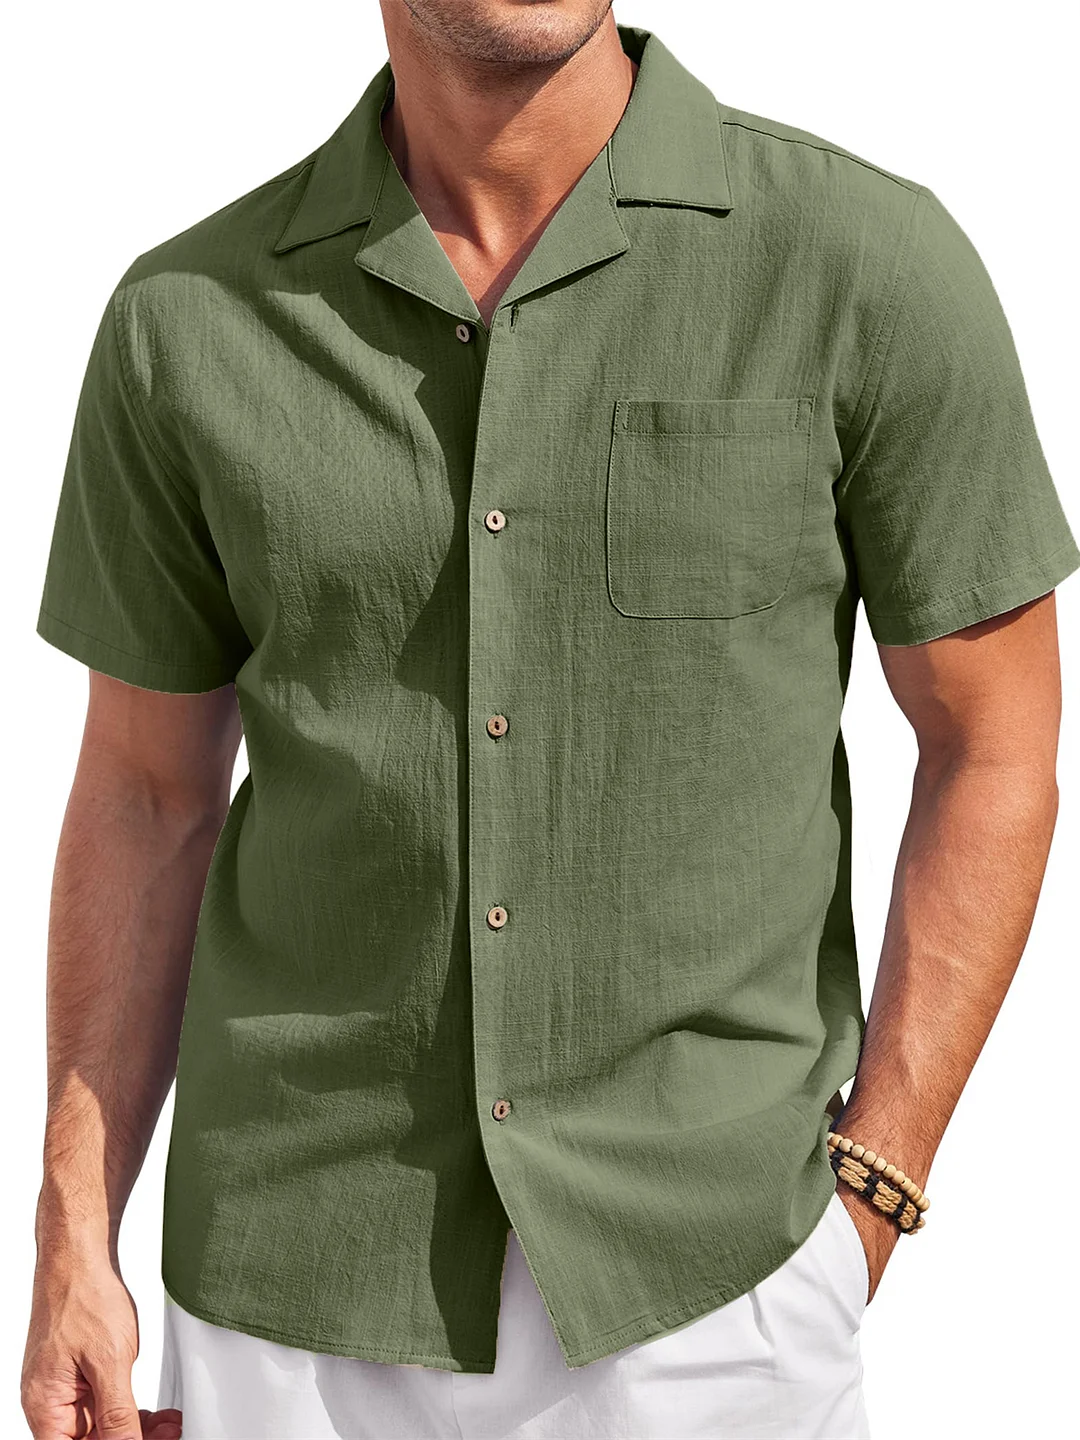 Suitmens Men's Cotton and Linen Cuban Collar Pocket Casual Short Sleeve Shirt